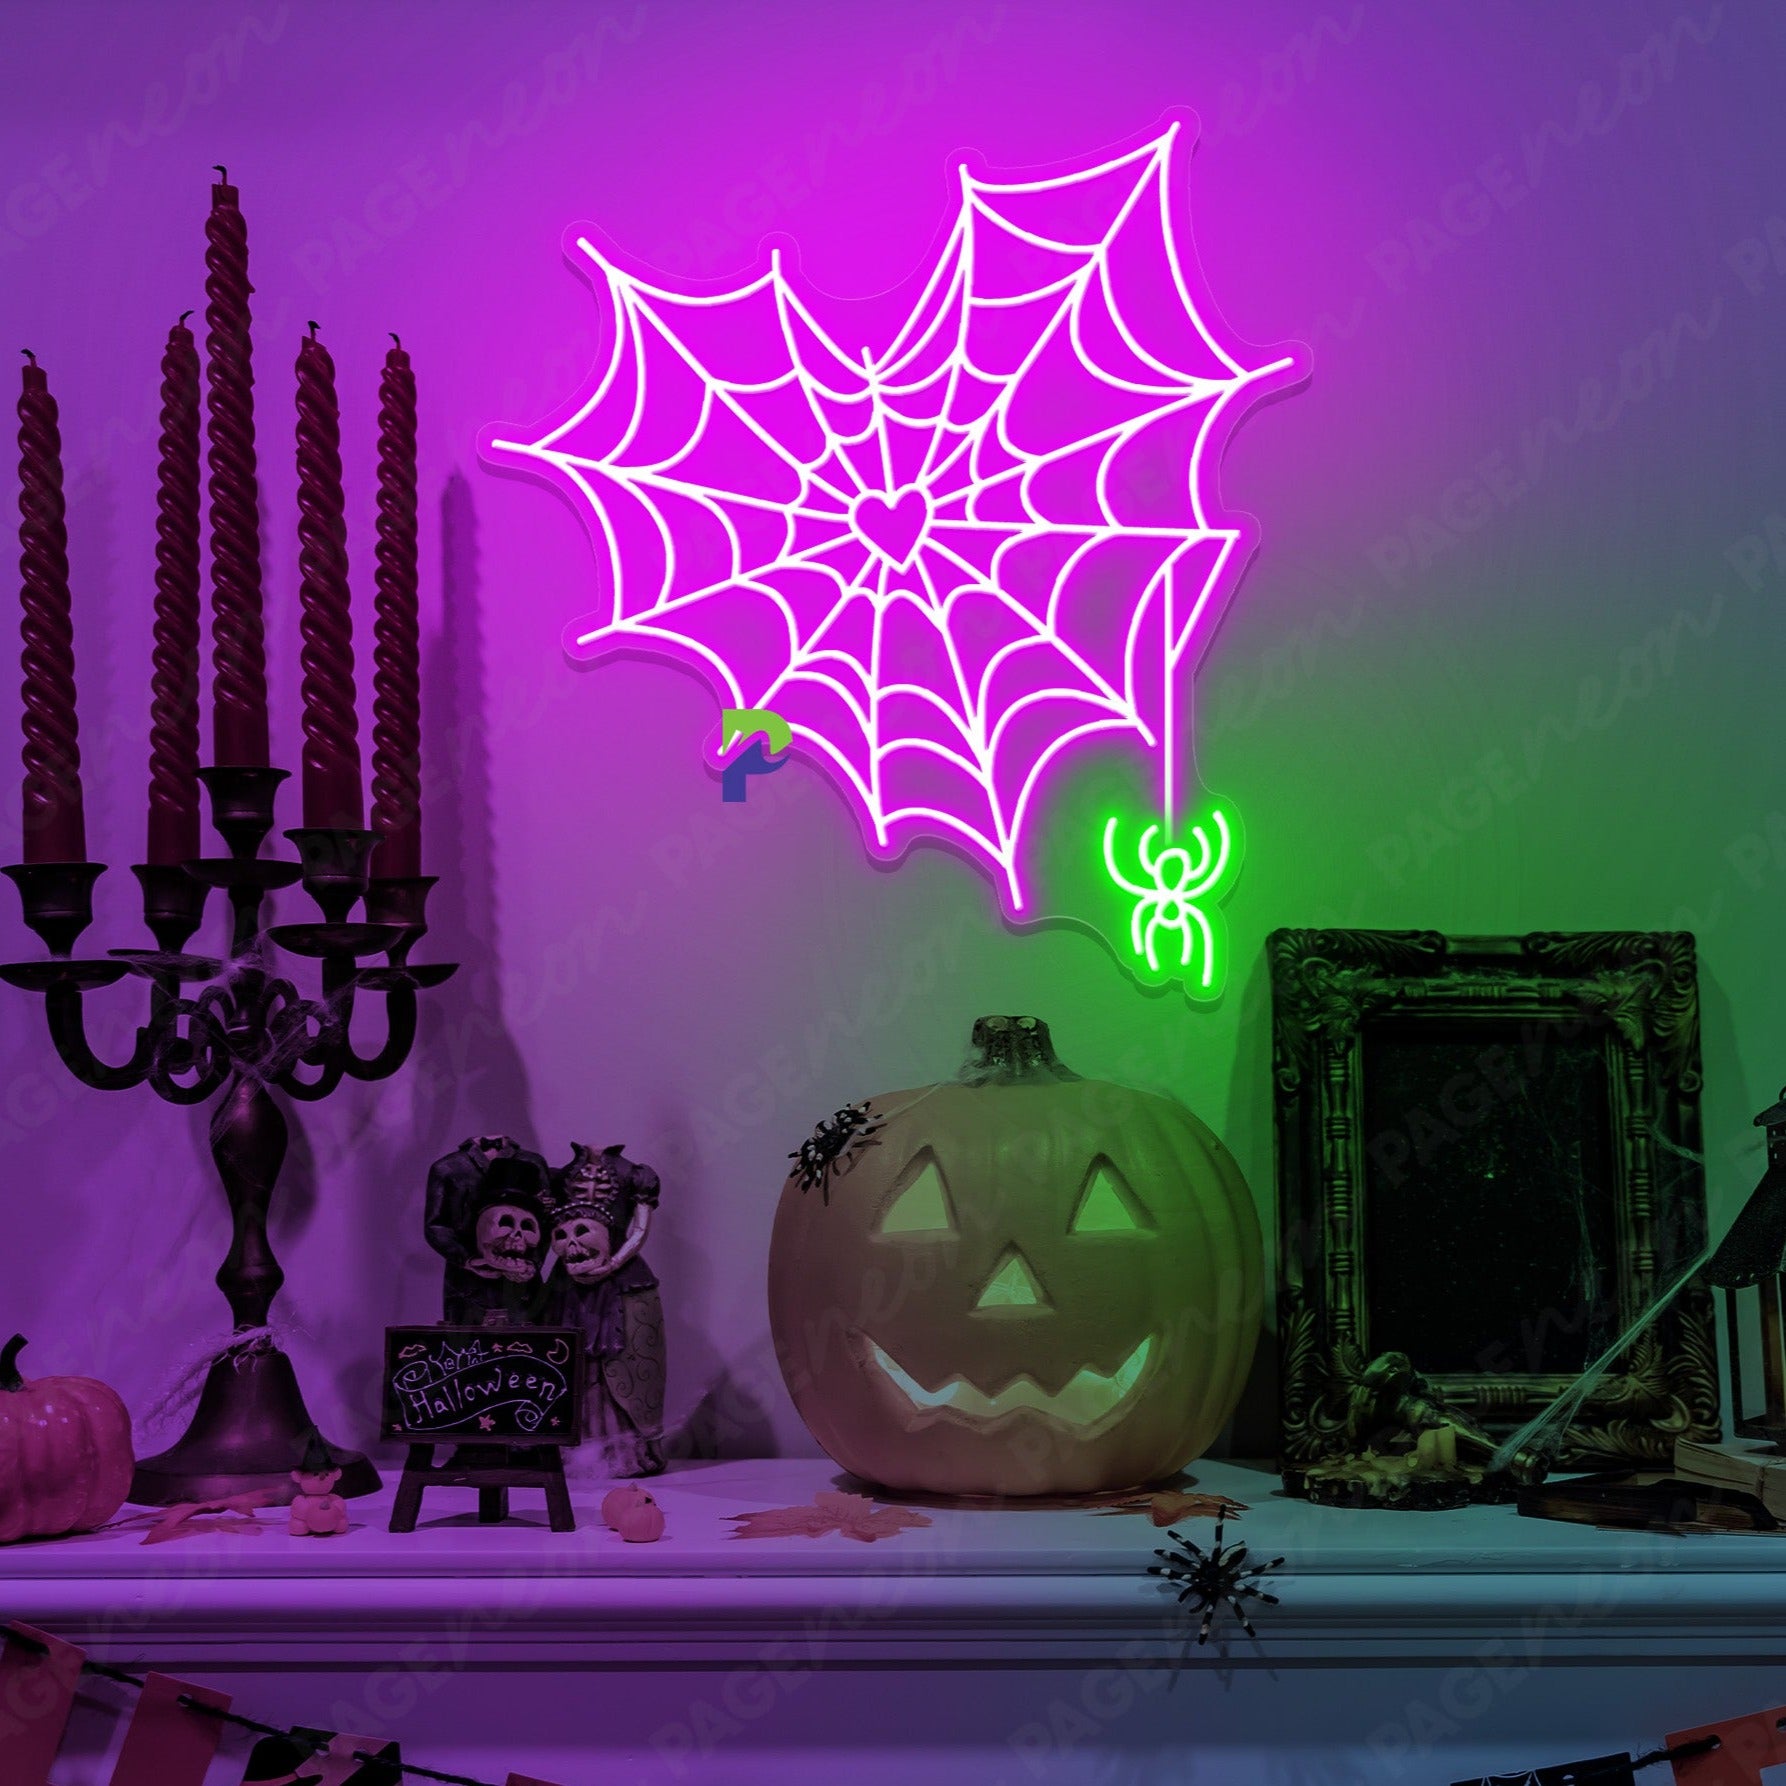 Spider Web Neon Sign Halloween Led Light purple